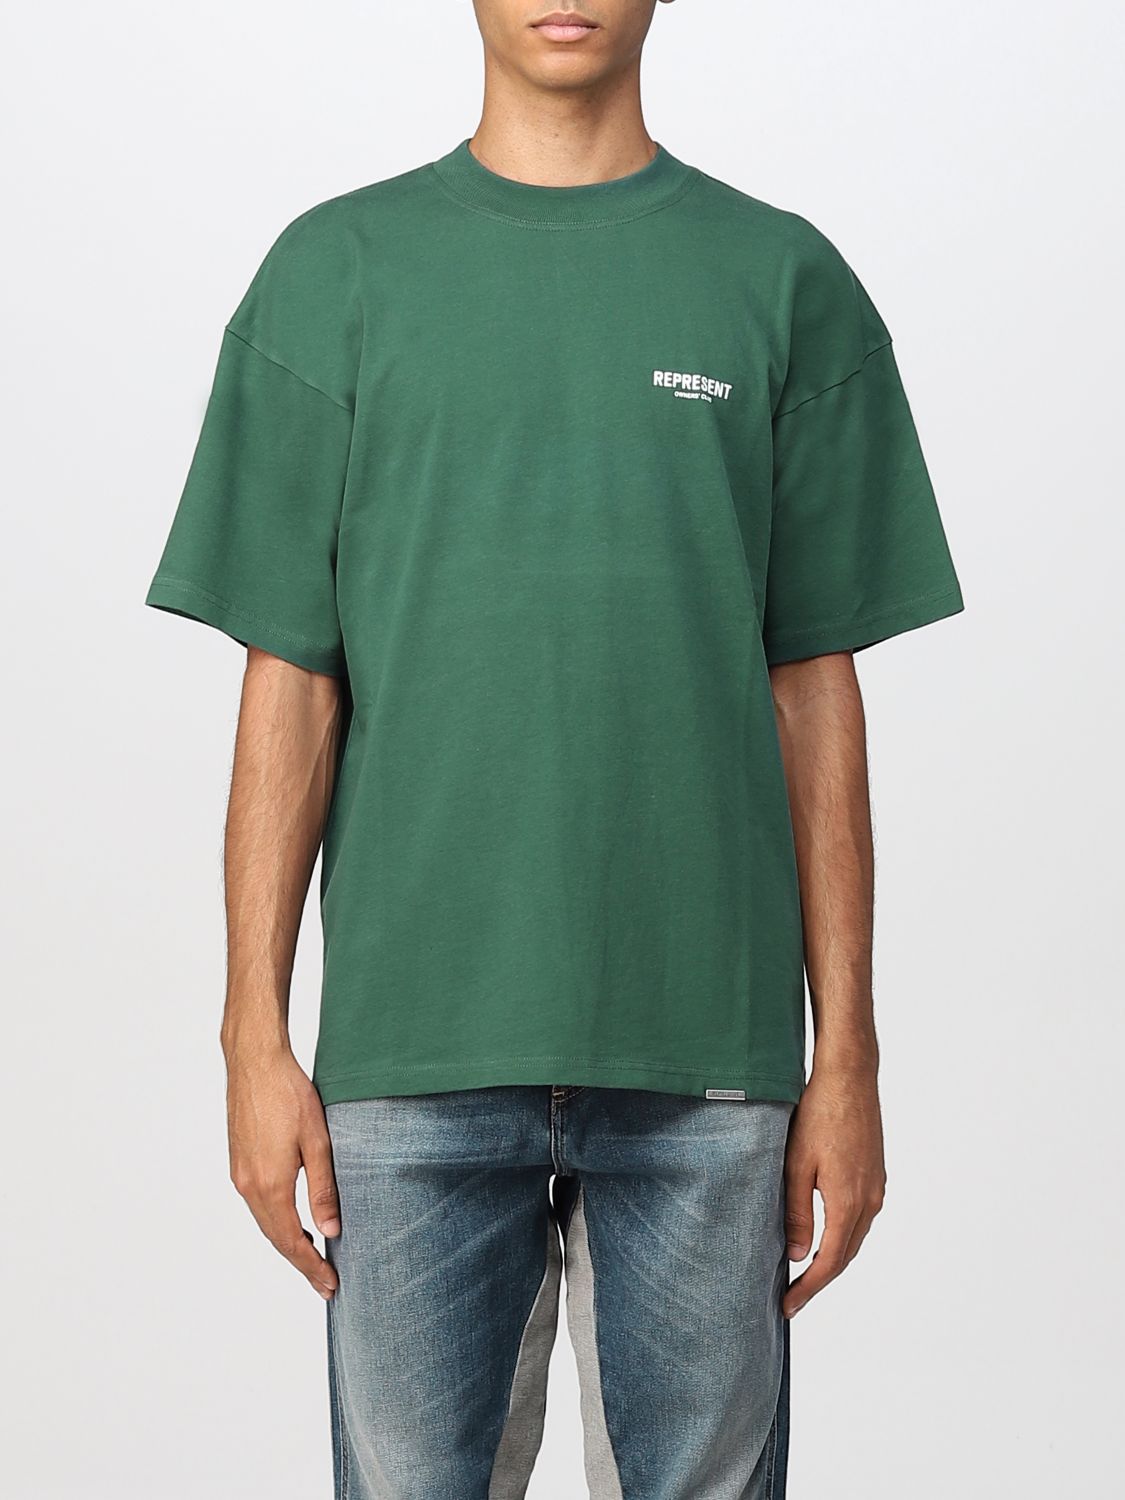 REPRESENT: t-shirt for man - Green | Represent t-shirt M05149 online on ...